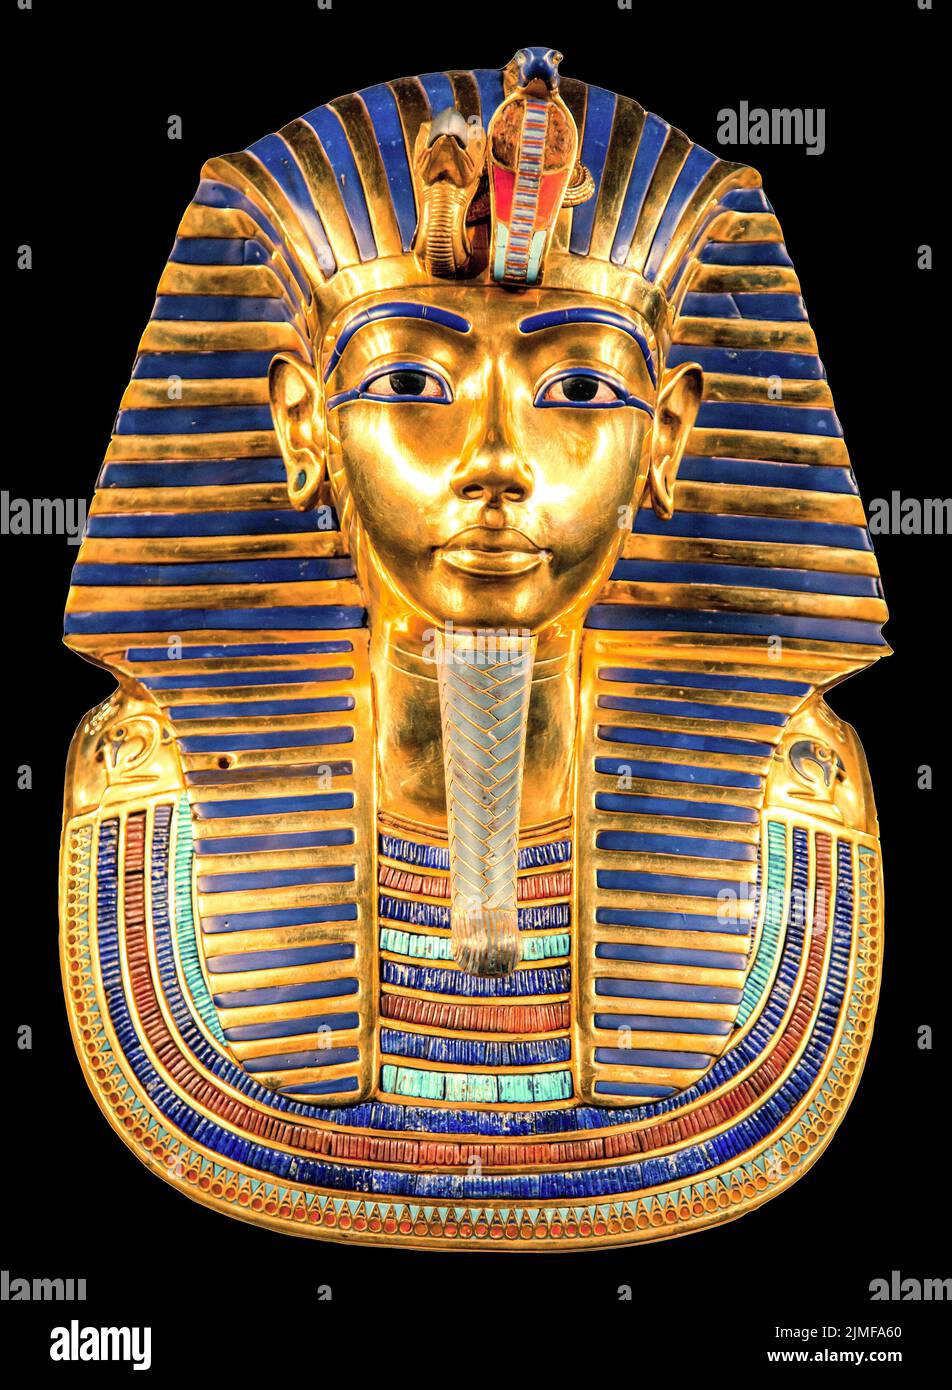 Tutankhamun's golden burial mask on black bacground. King Tut. Stock Photo